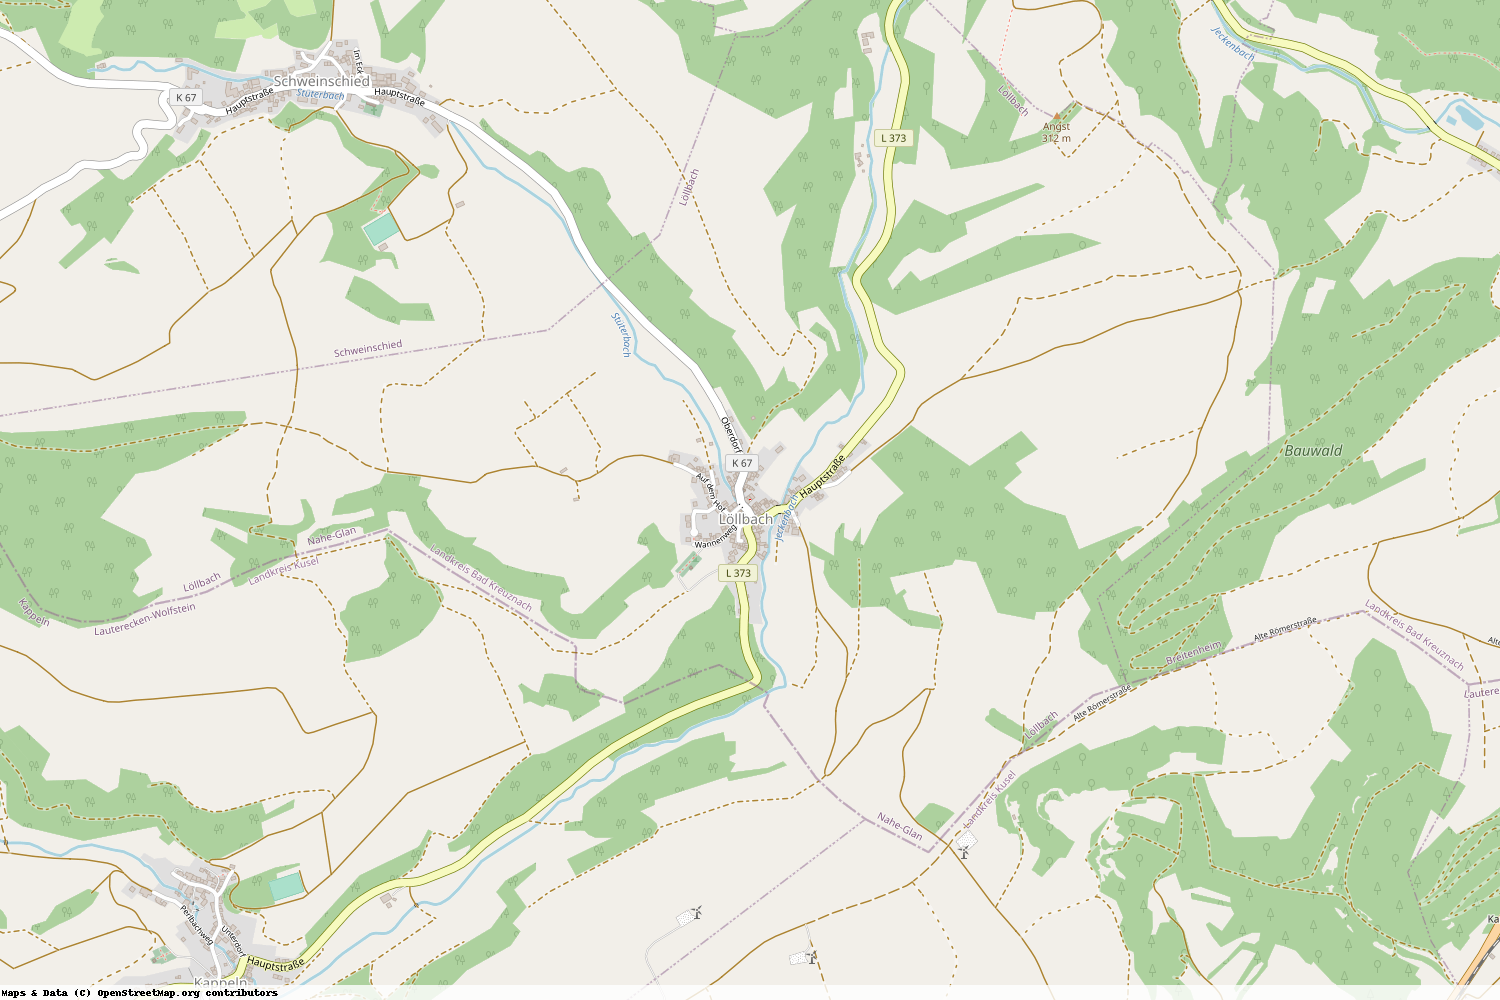 Ist gerade Stromausfall in Rheinland-Pfalz - Bad Kreuznach - Löllbach?